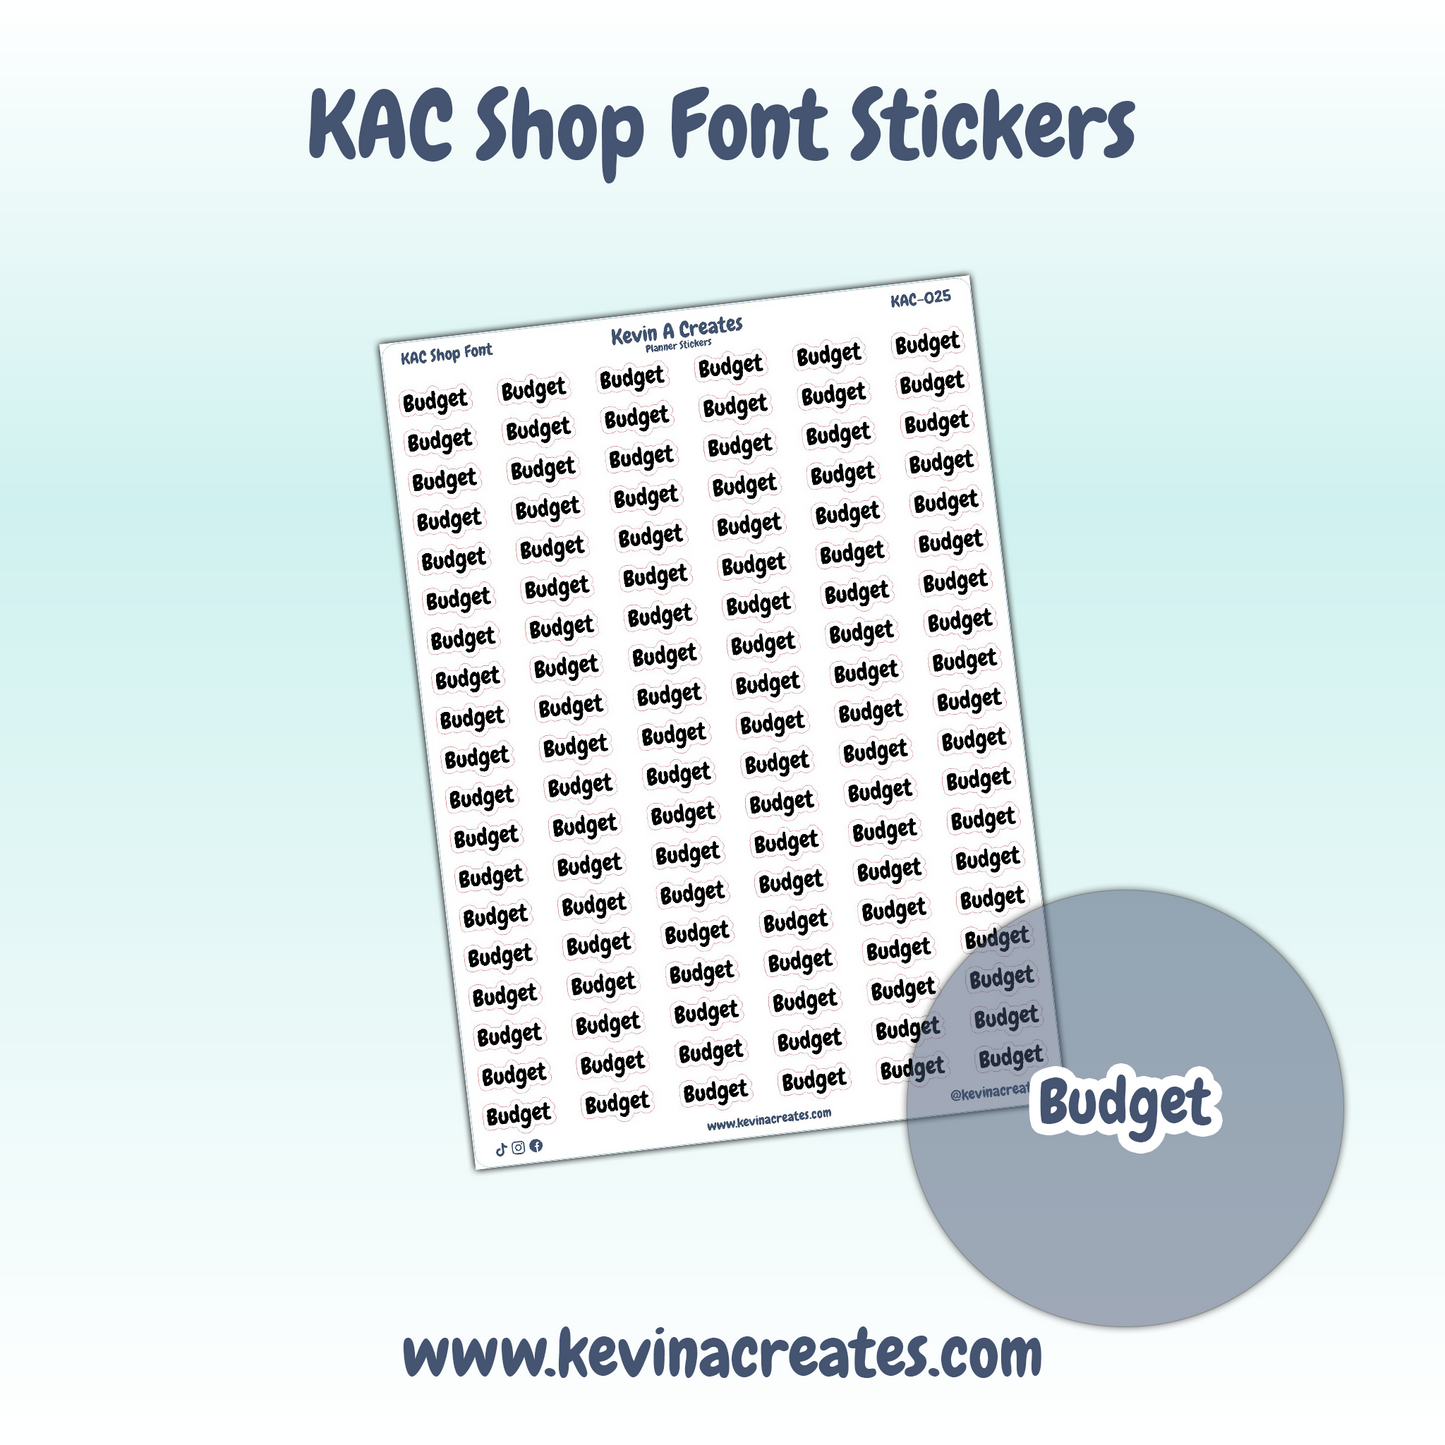 KAC-025, BUDGET, Kevin A Creates Shop Font, Script Planner Stickers